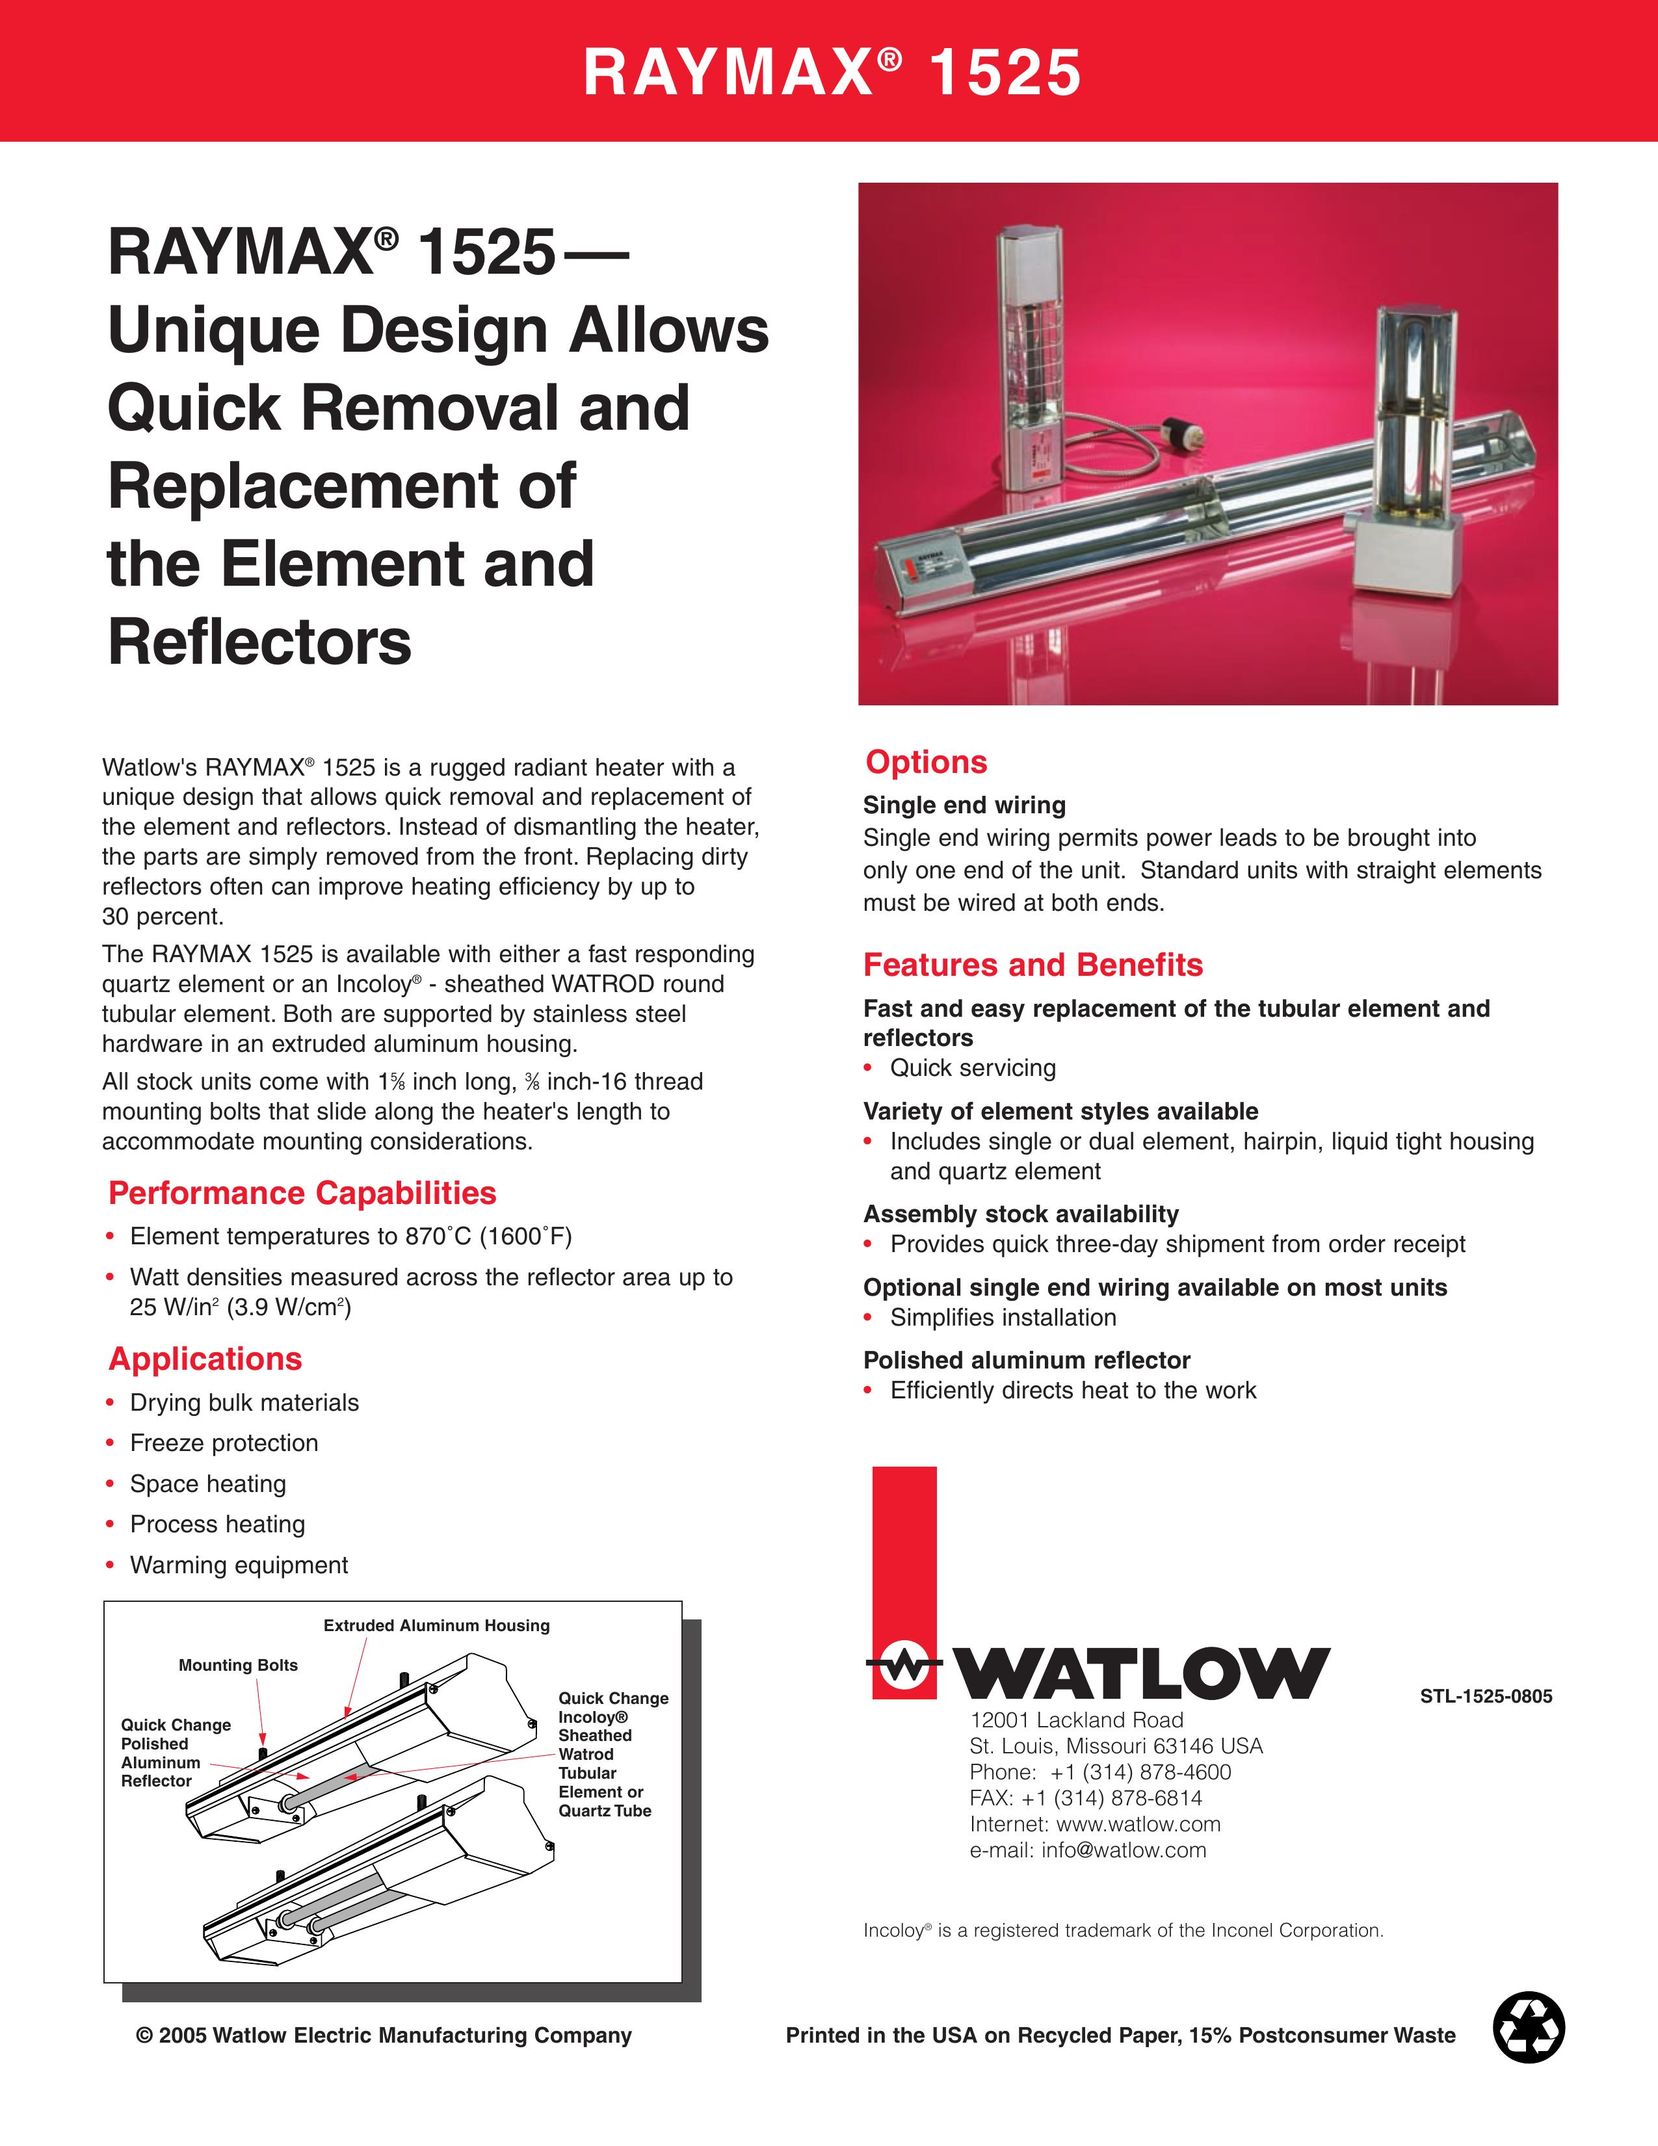 Watlow Electric 1525 Electric Heater User Manual